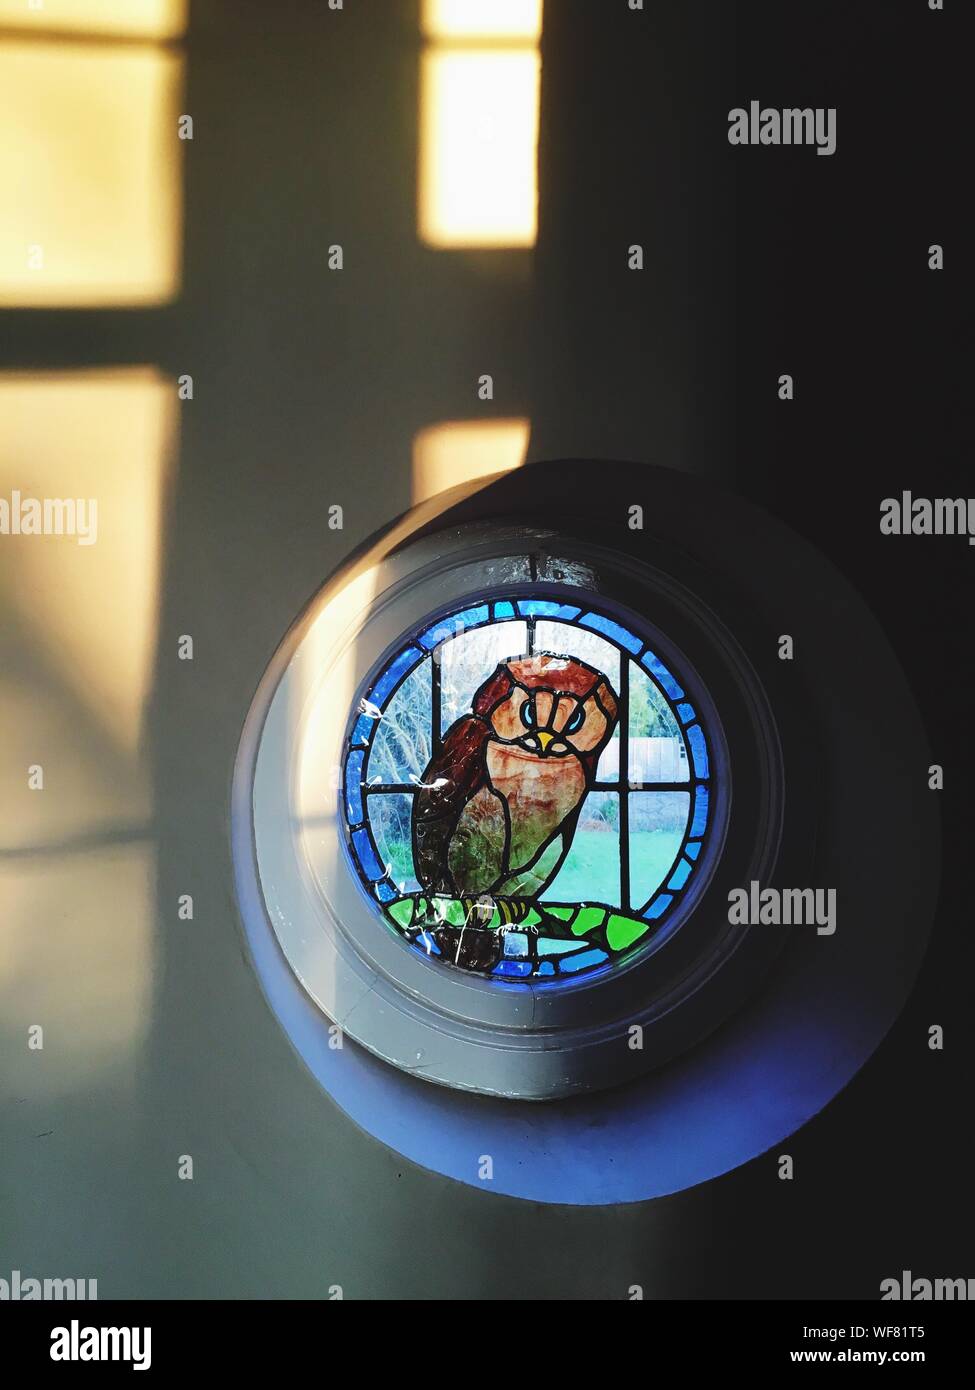 Owl Art On Stain Glass Window On Wall Stock Photo